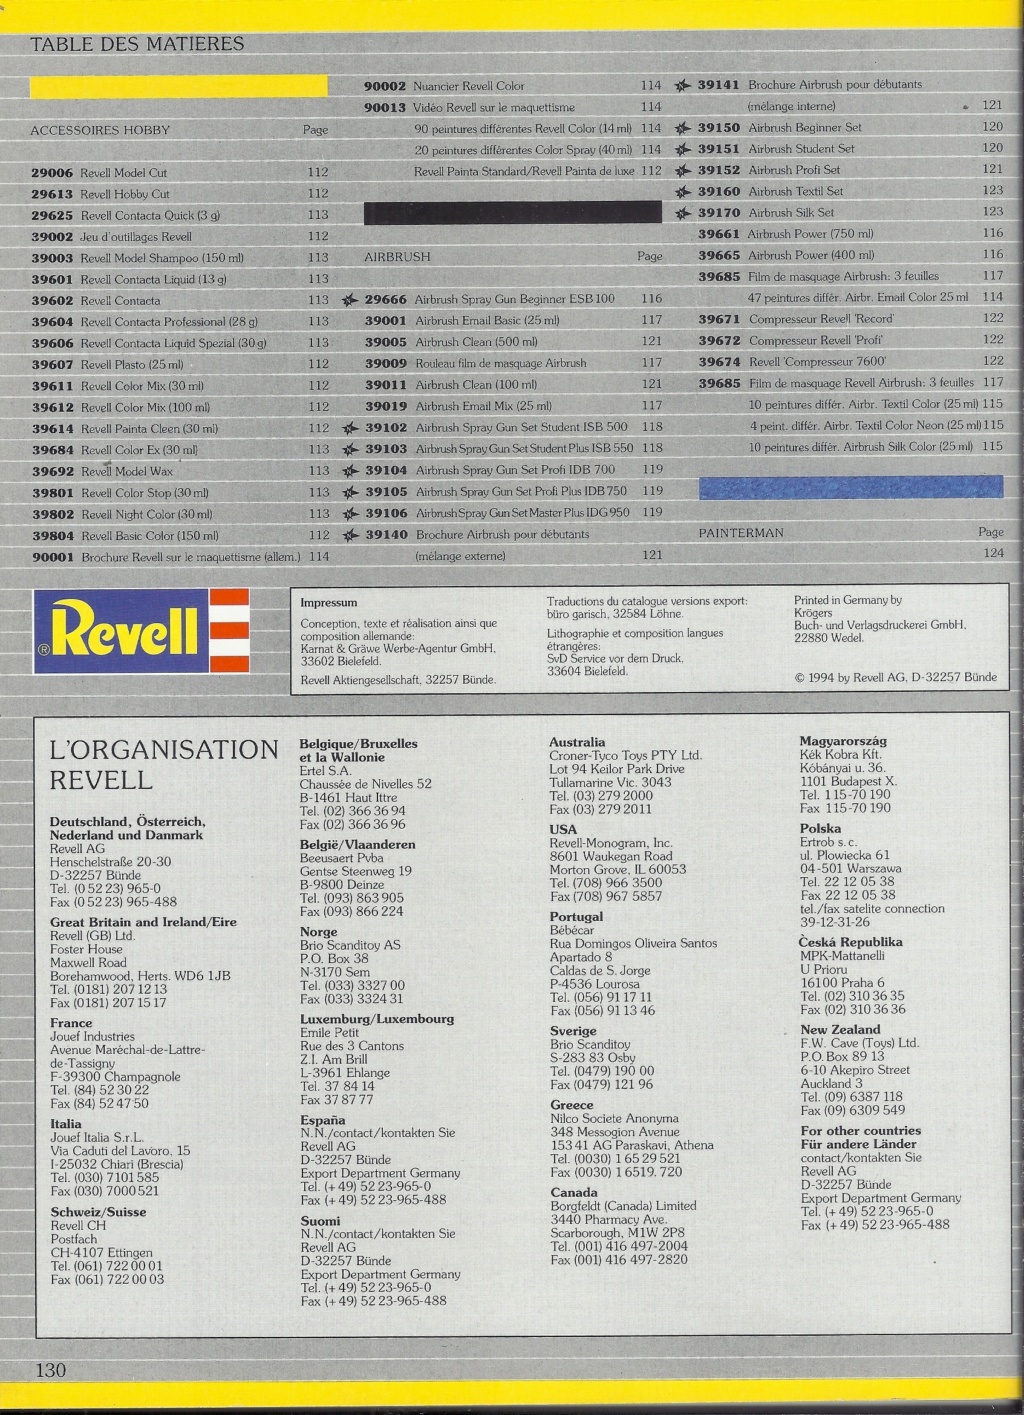 [REVELL 1995] Catalogue 1995 Reve4231